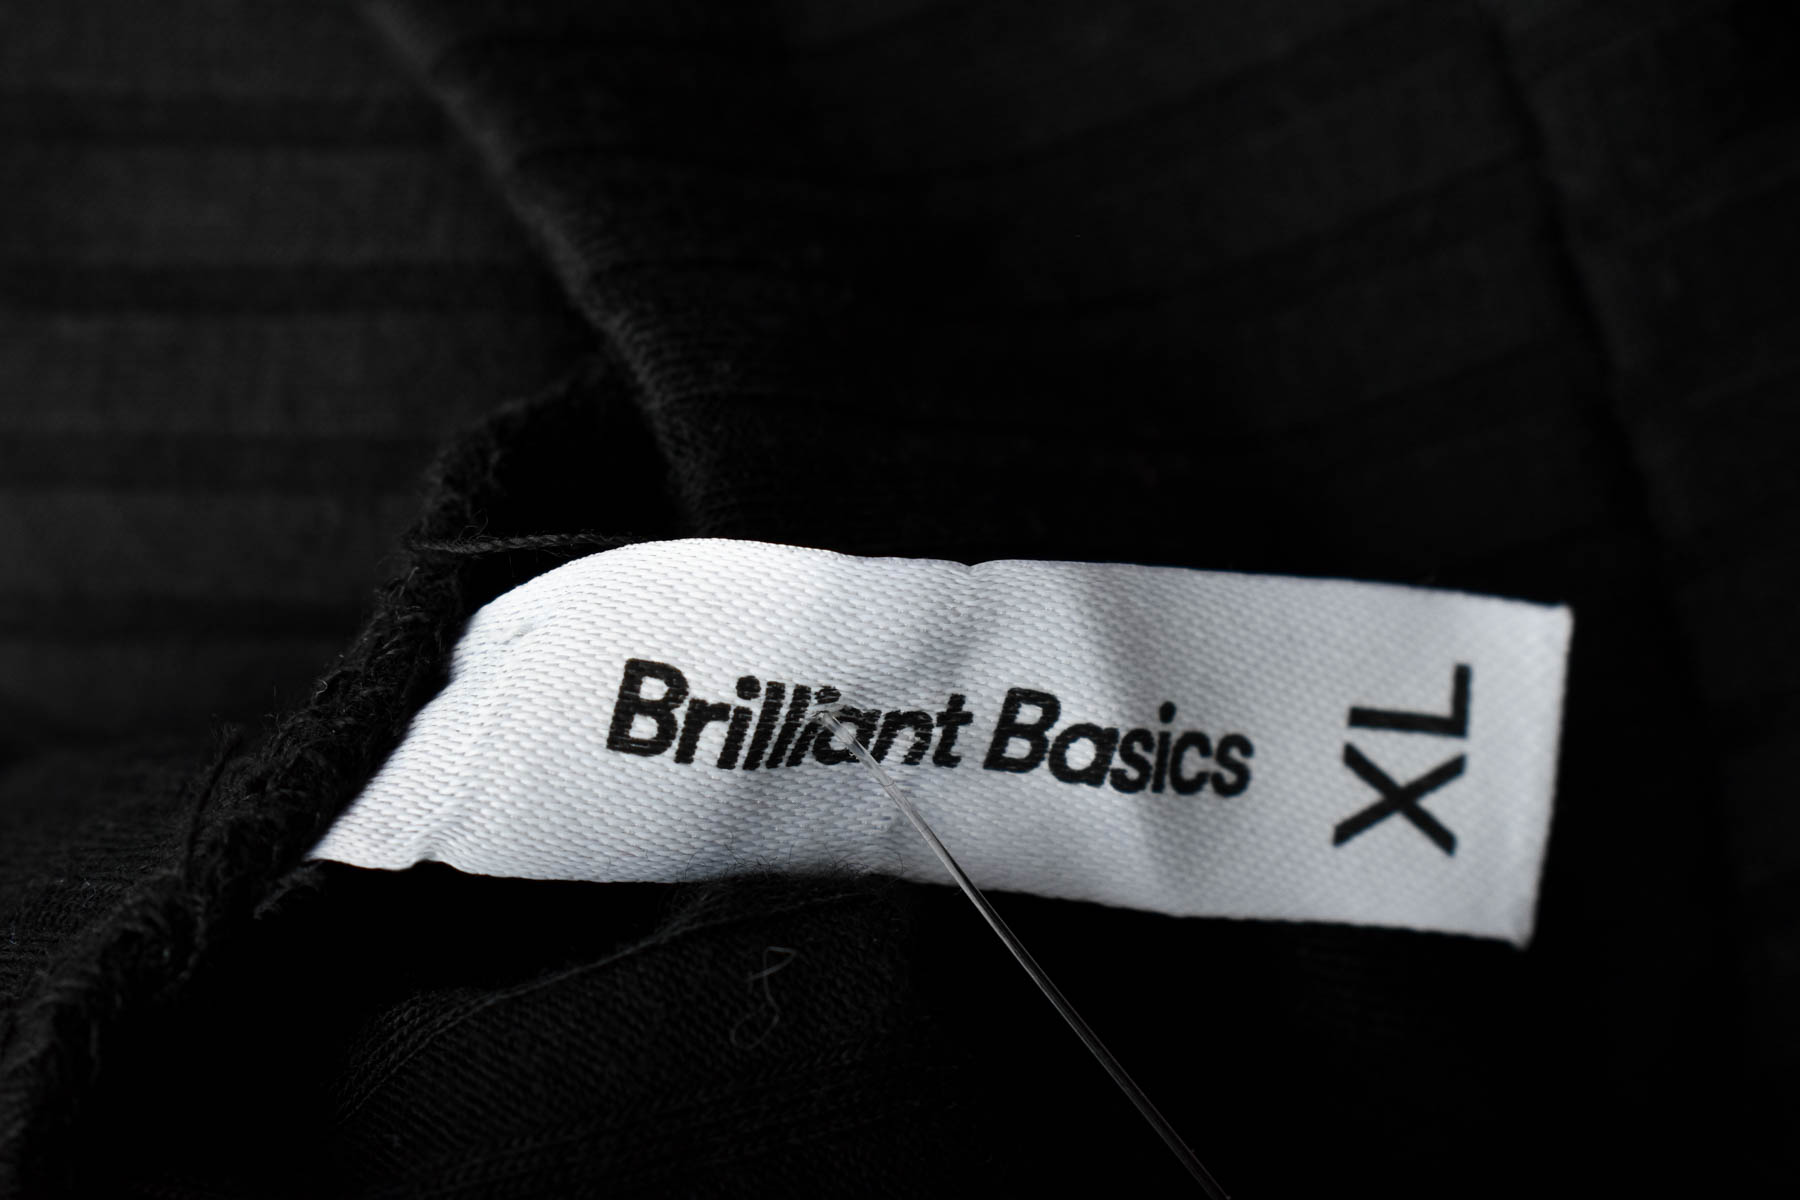 Women's blouse - Brilliant Basics - 2